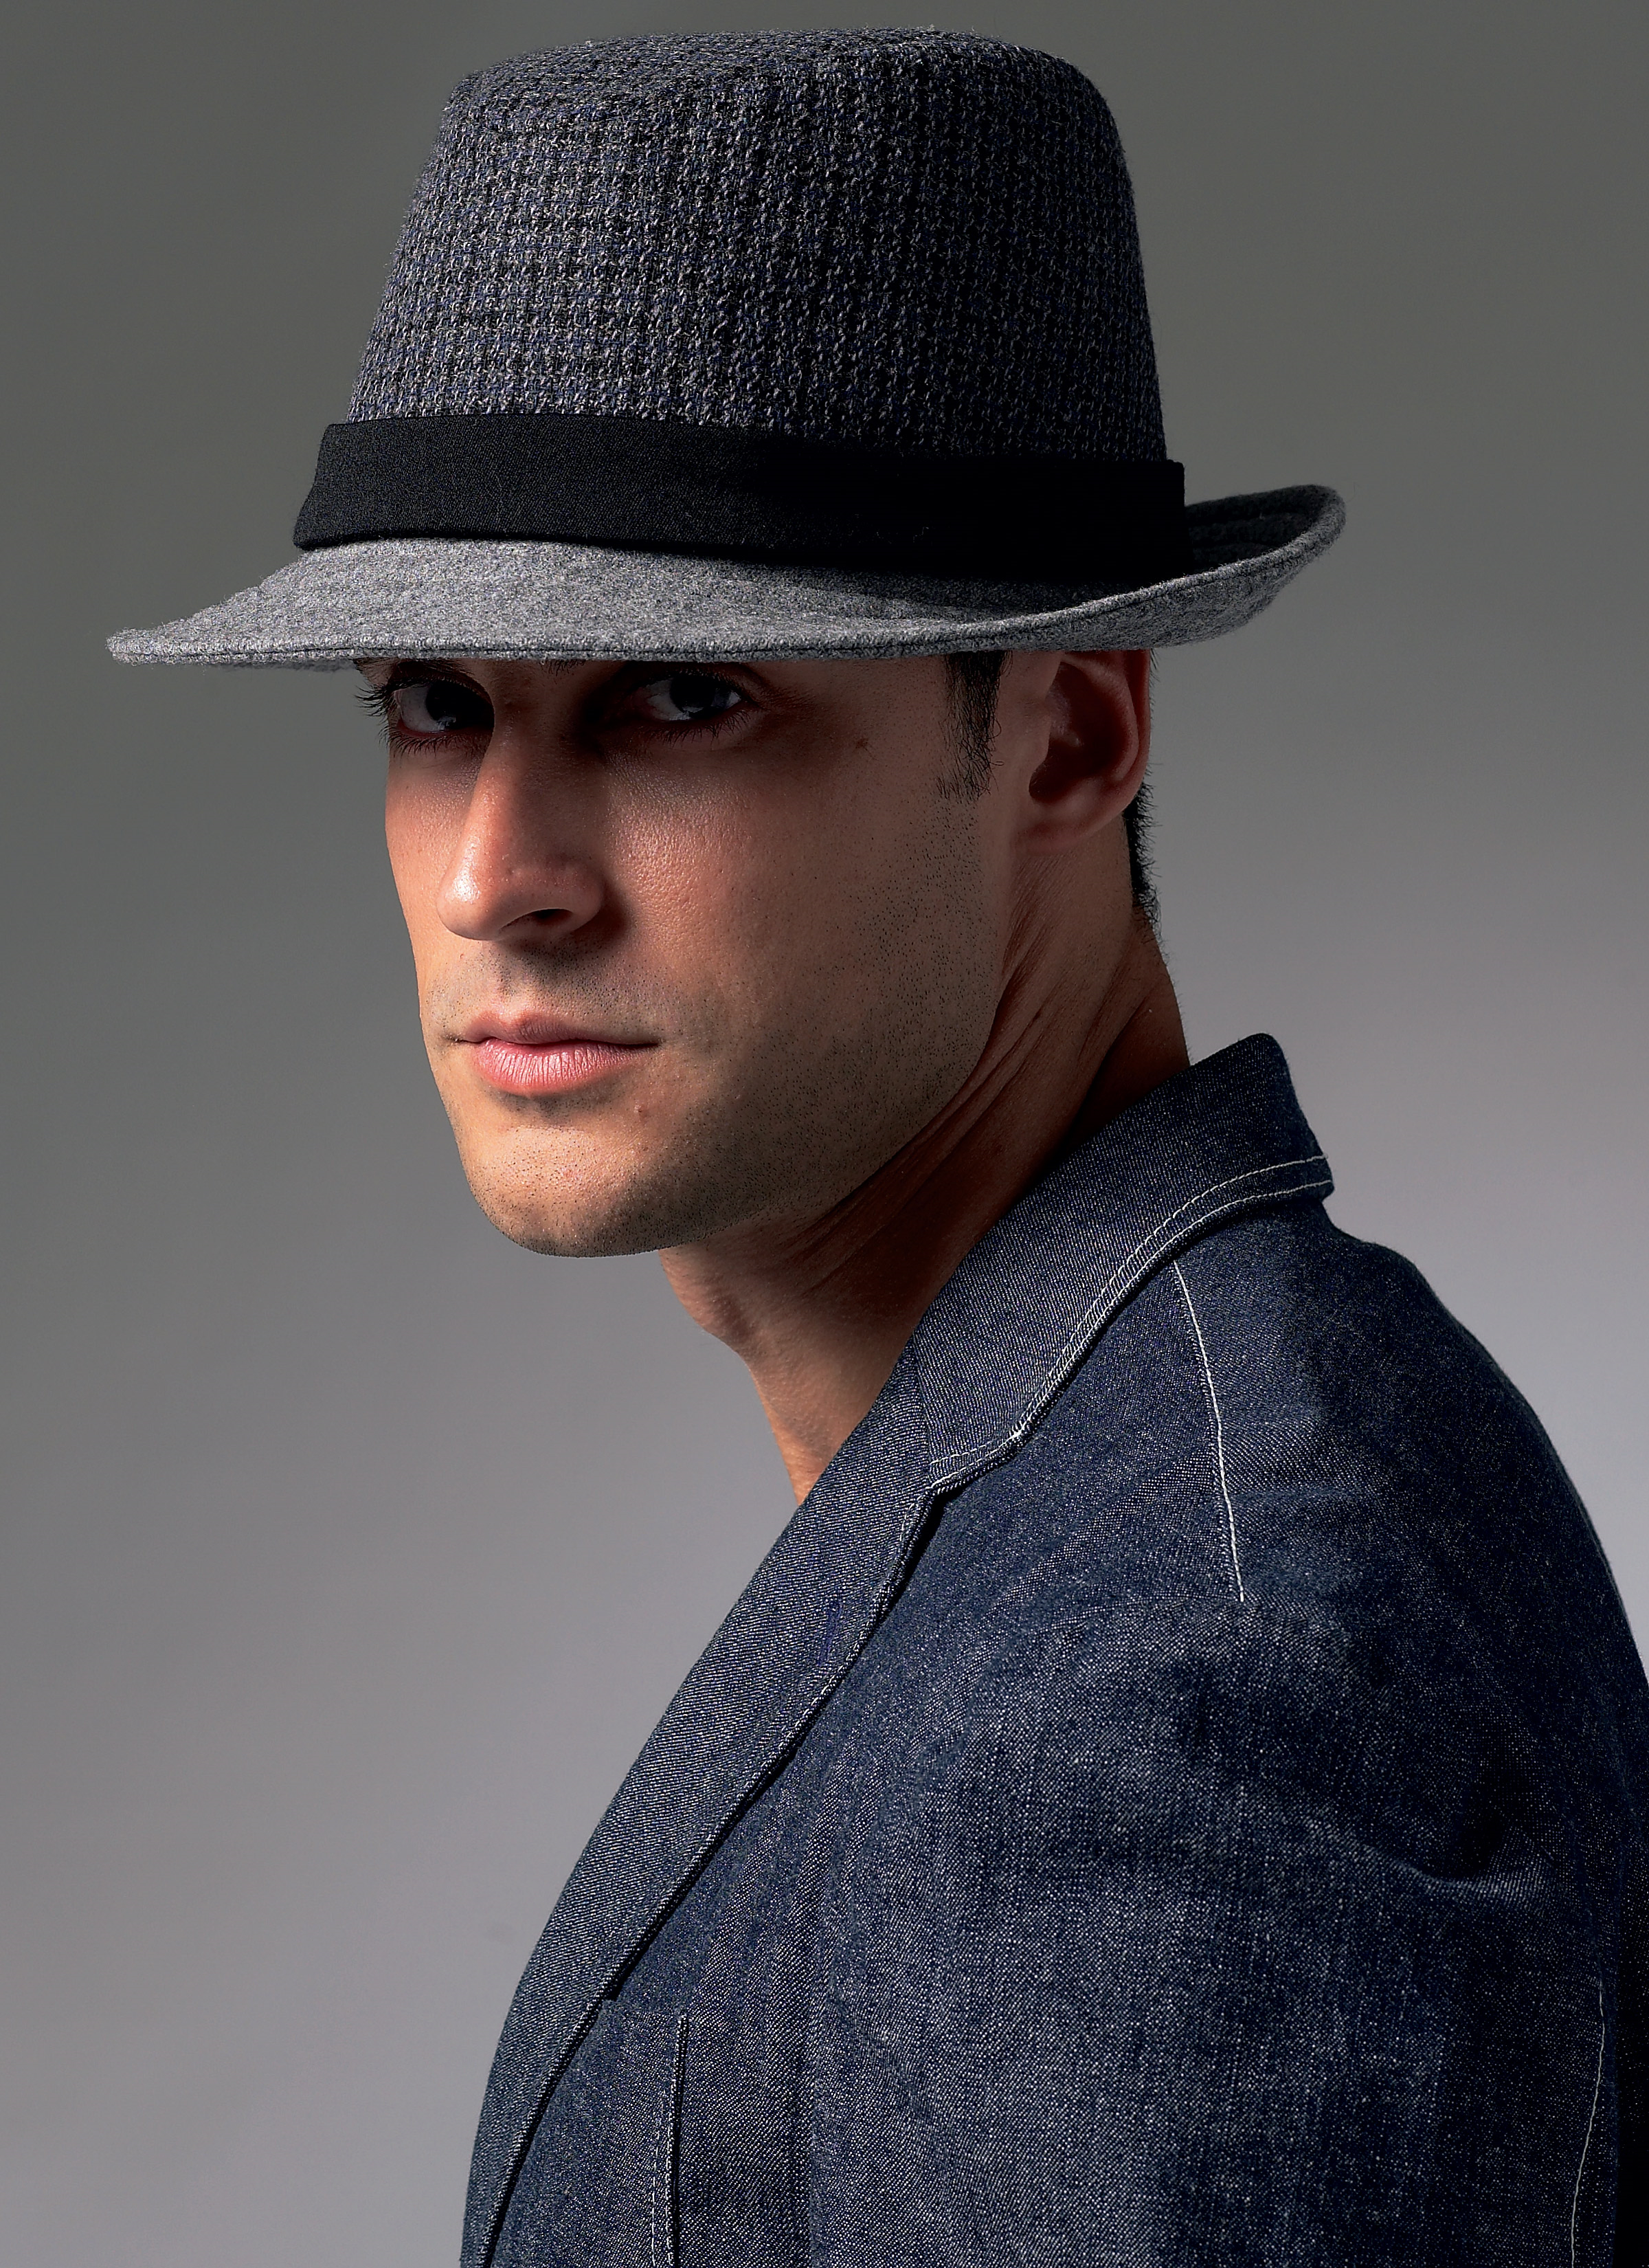 V8869 Vogue 8869 Sewing Pattern 5 Hats Men's in 3 Styles Sizes S-M-L-XL Chapeaux 